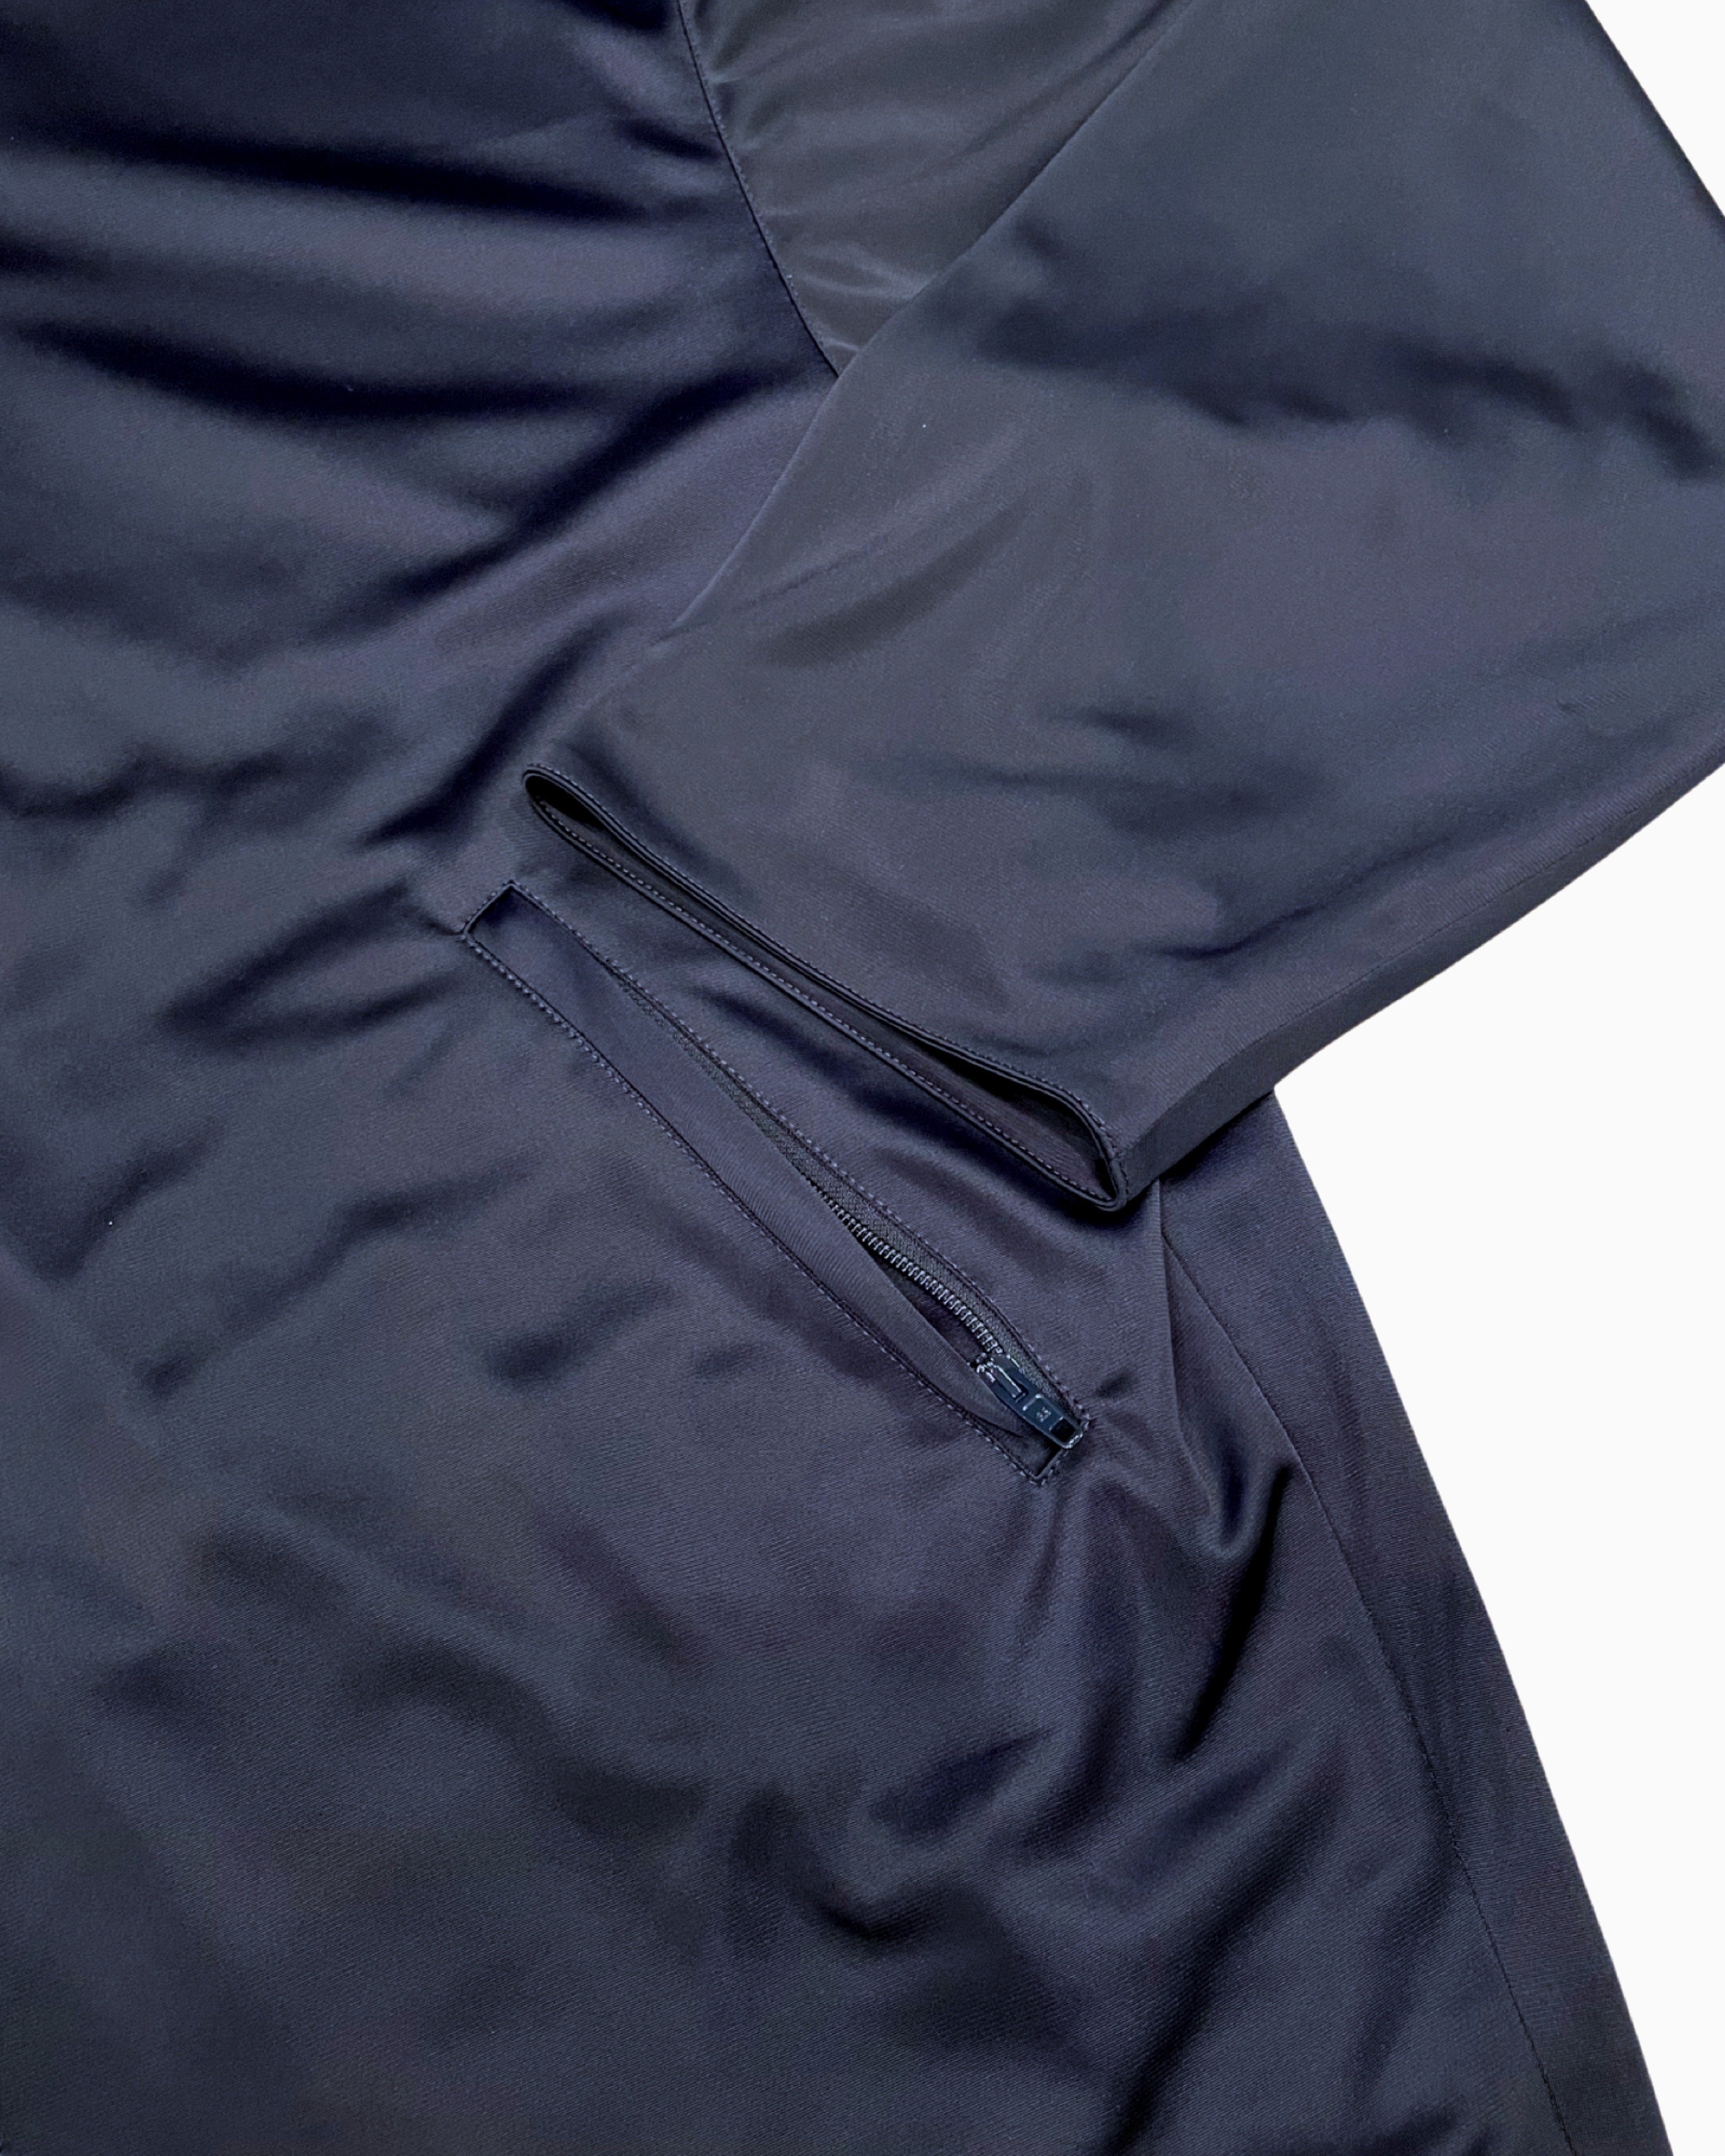 Balenciaga Garde-Robe Tracksuit Jacket – FUTURO